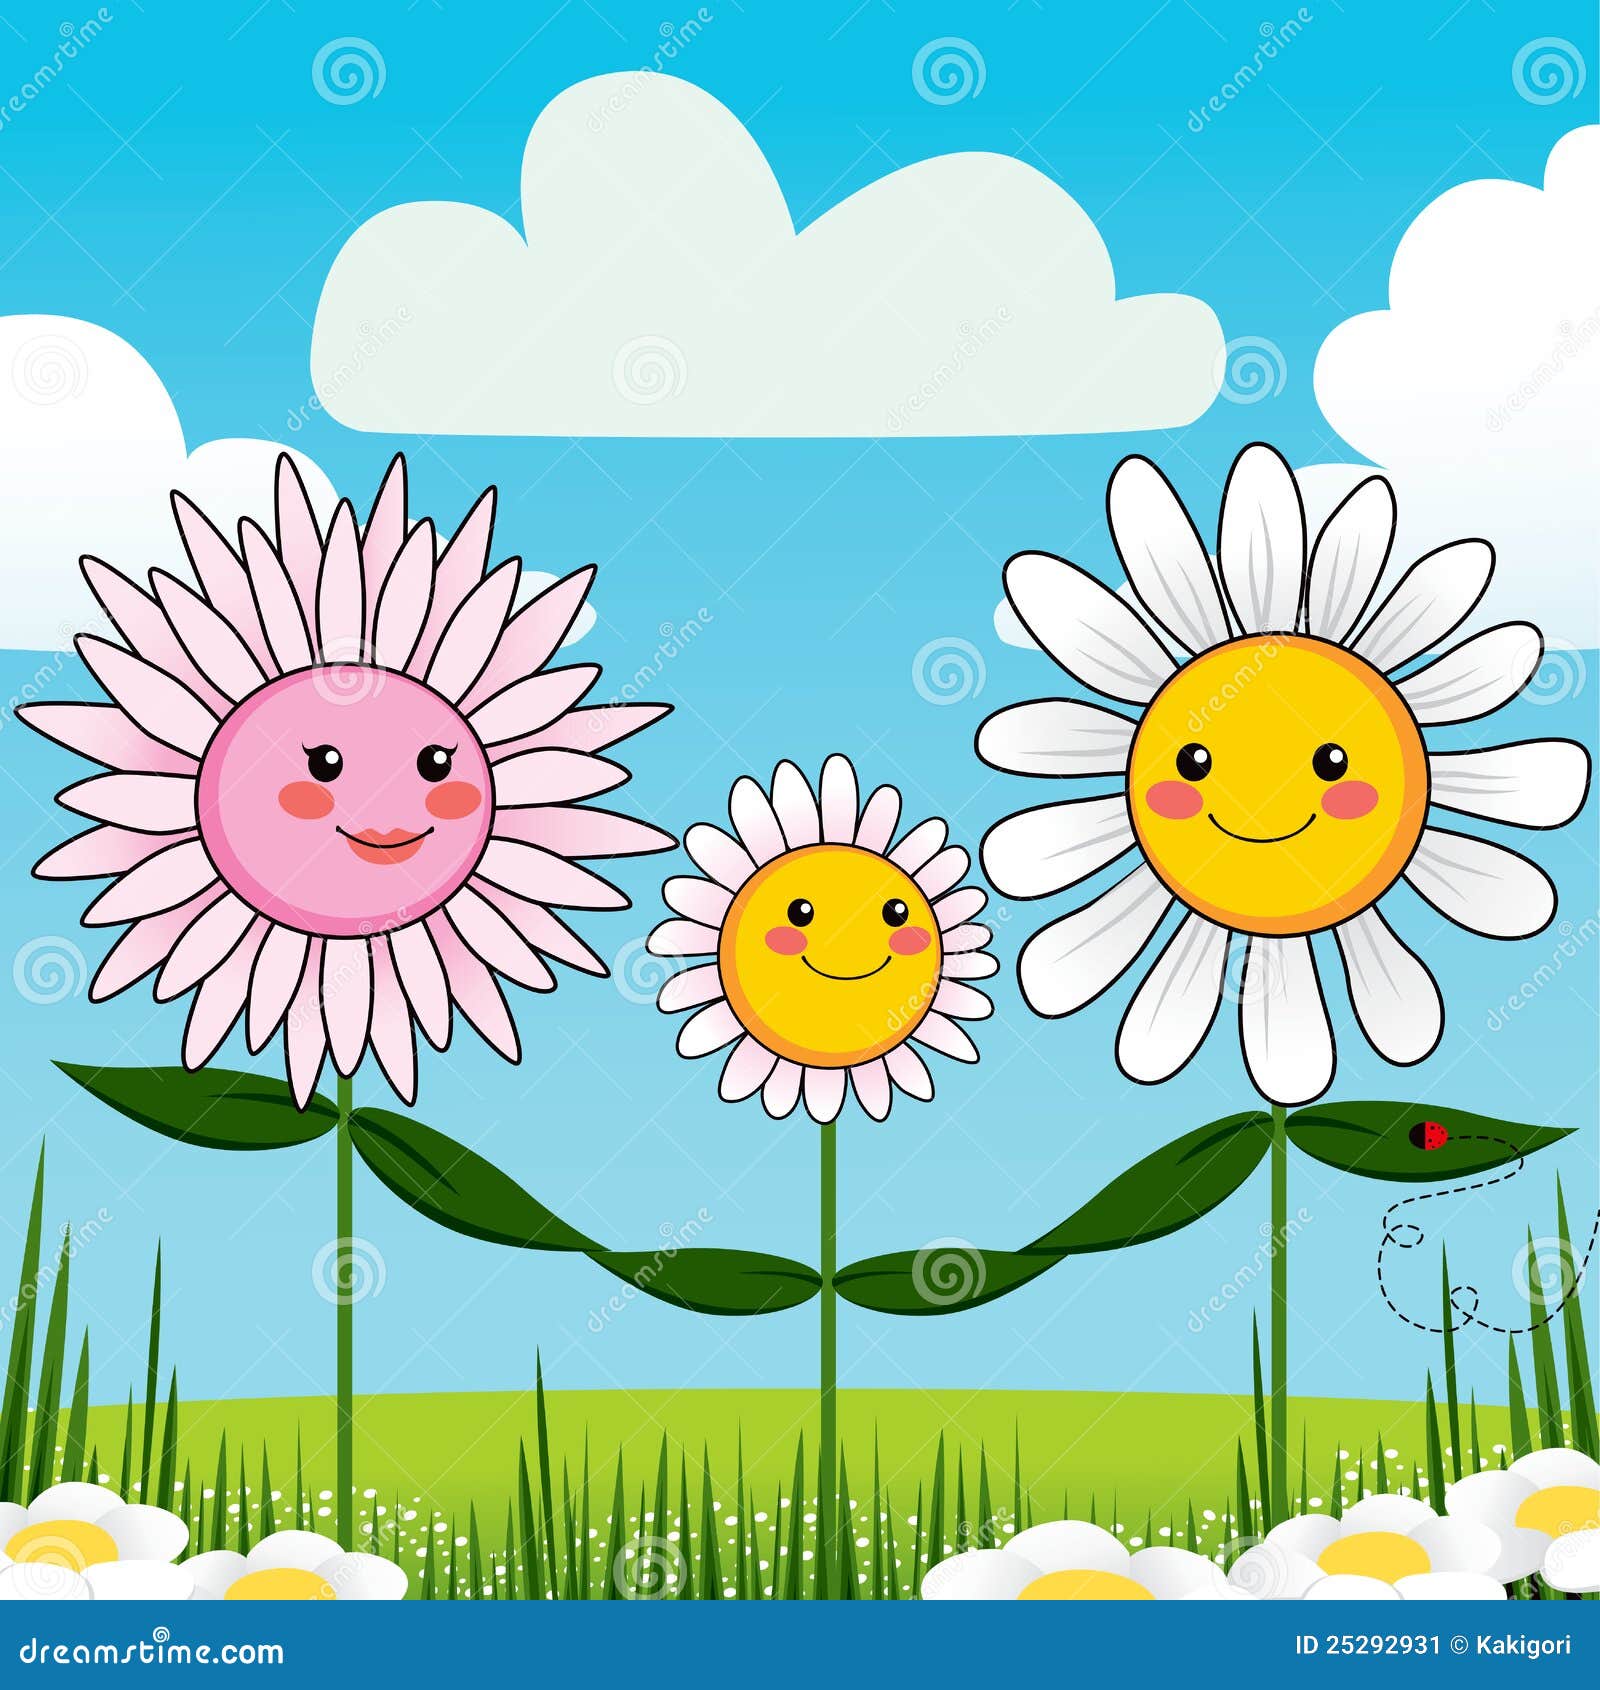 Flower Family Stock Image - Image: 25292931